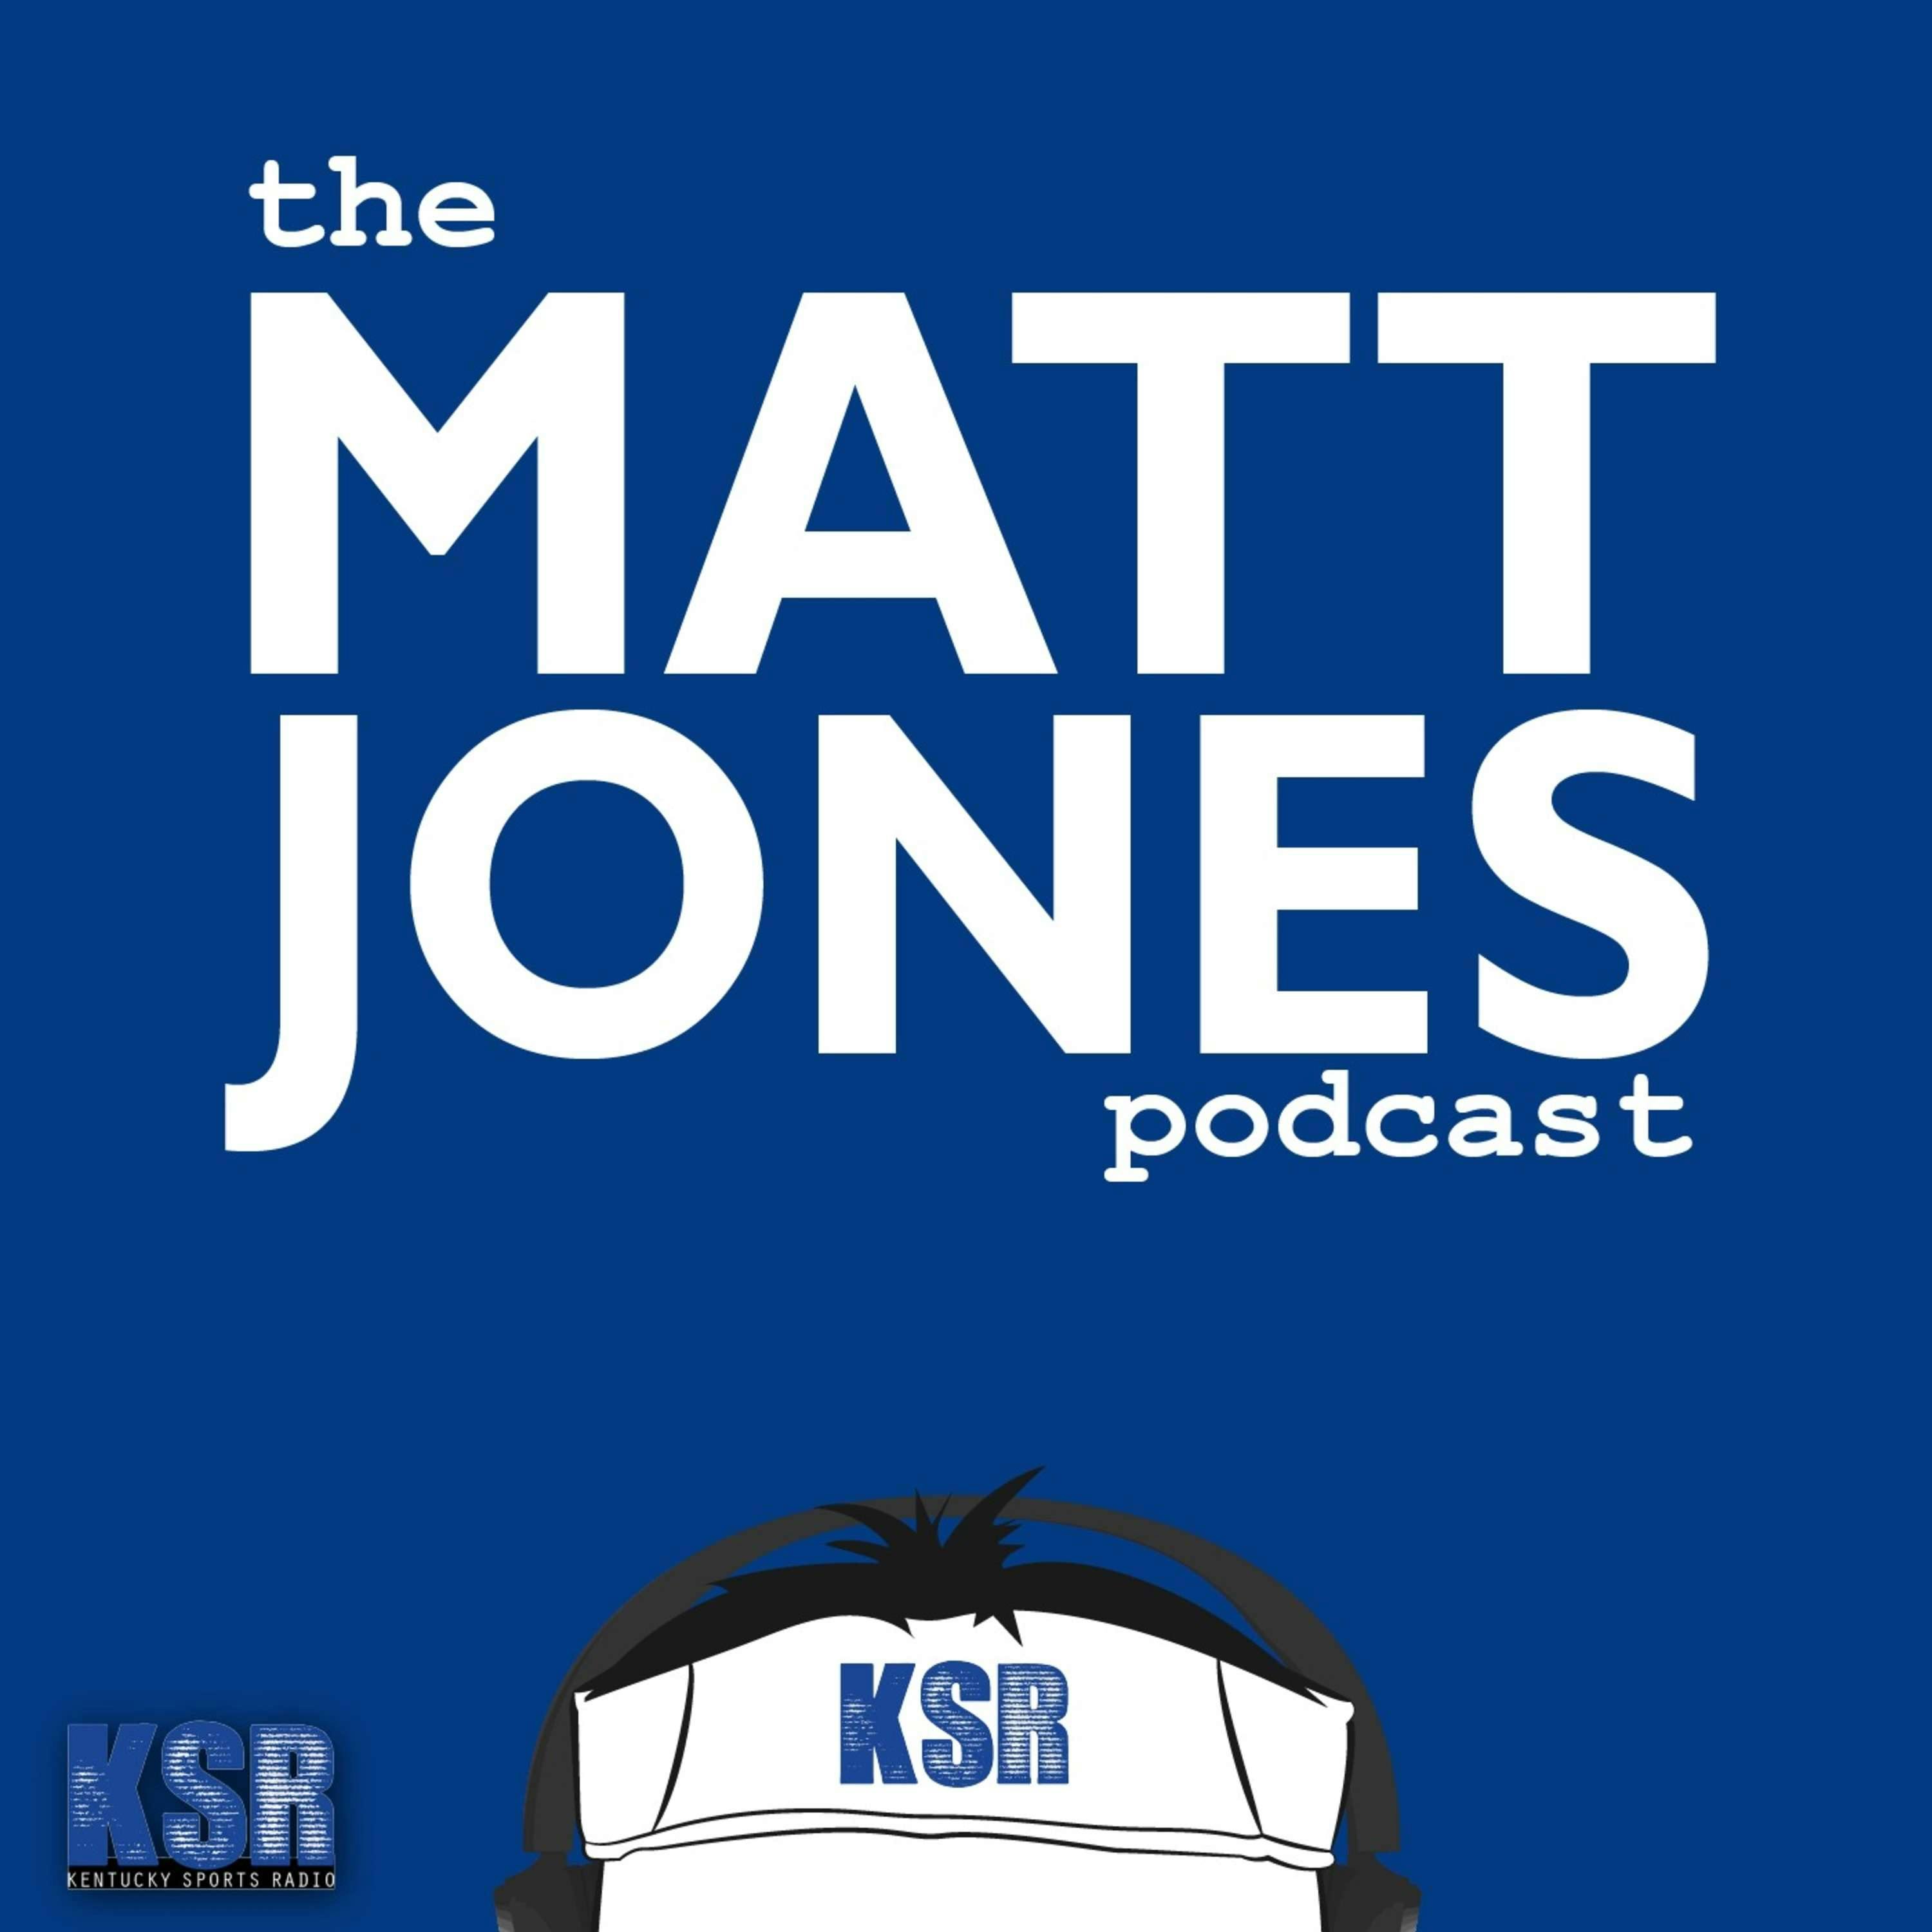 The Matt Jones Podcast: E39 Nick Coffey, Alex Kennedy & Jonathan Martin